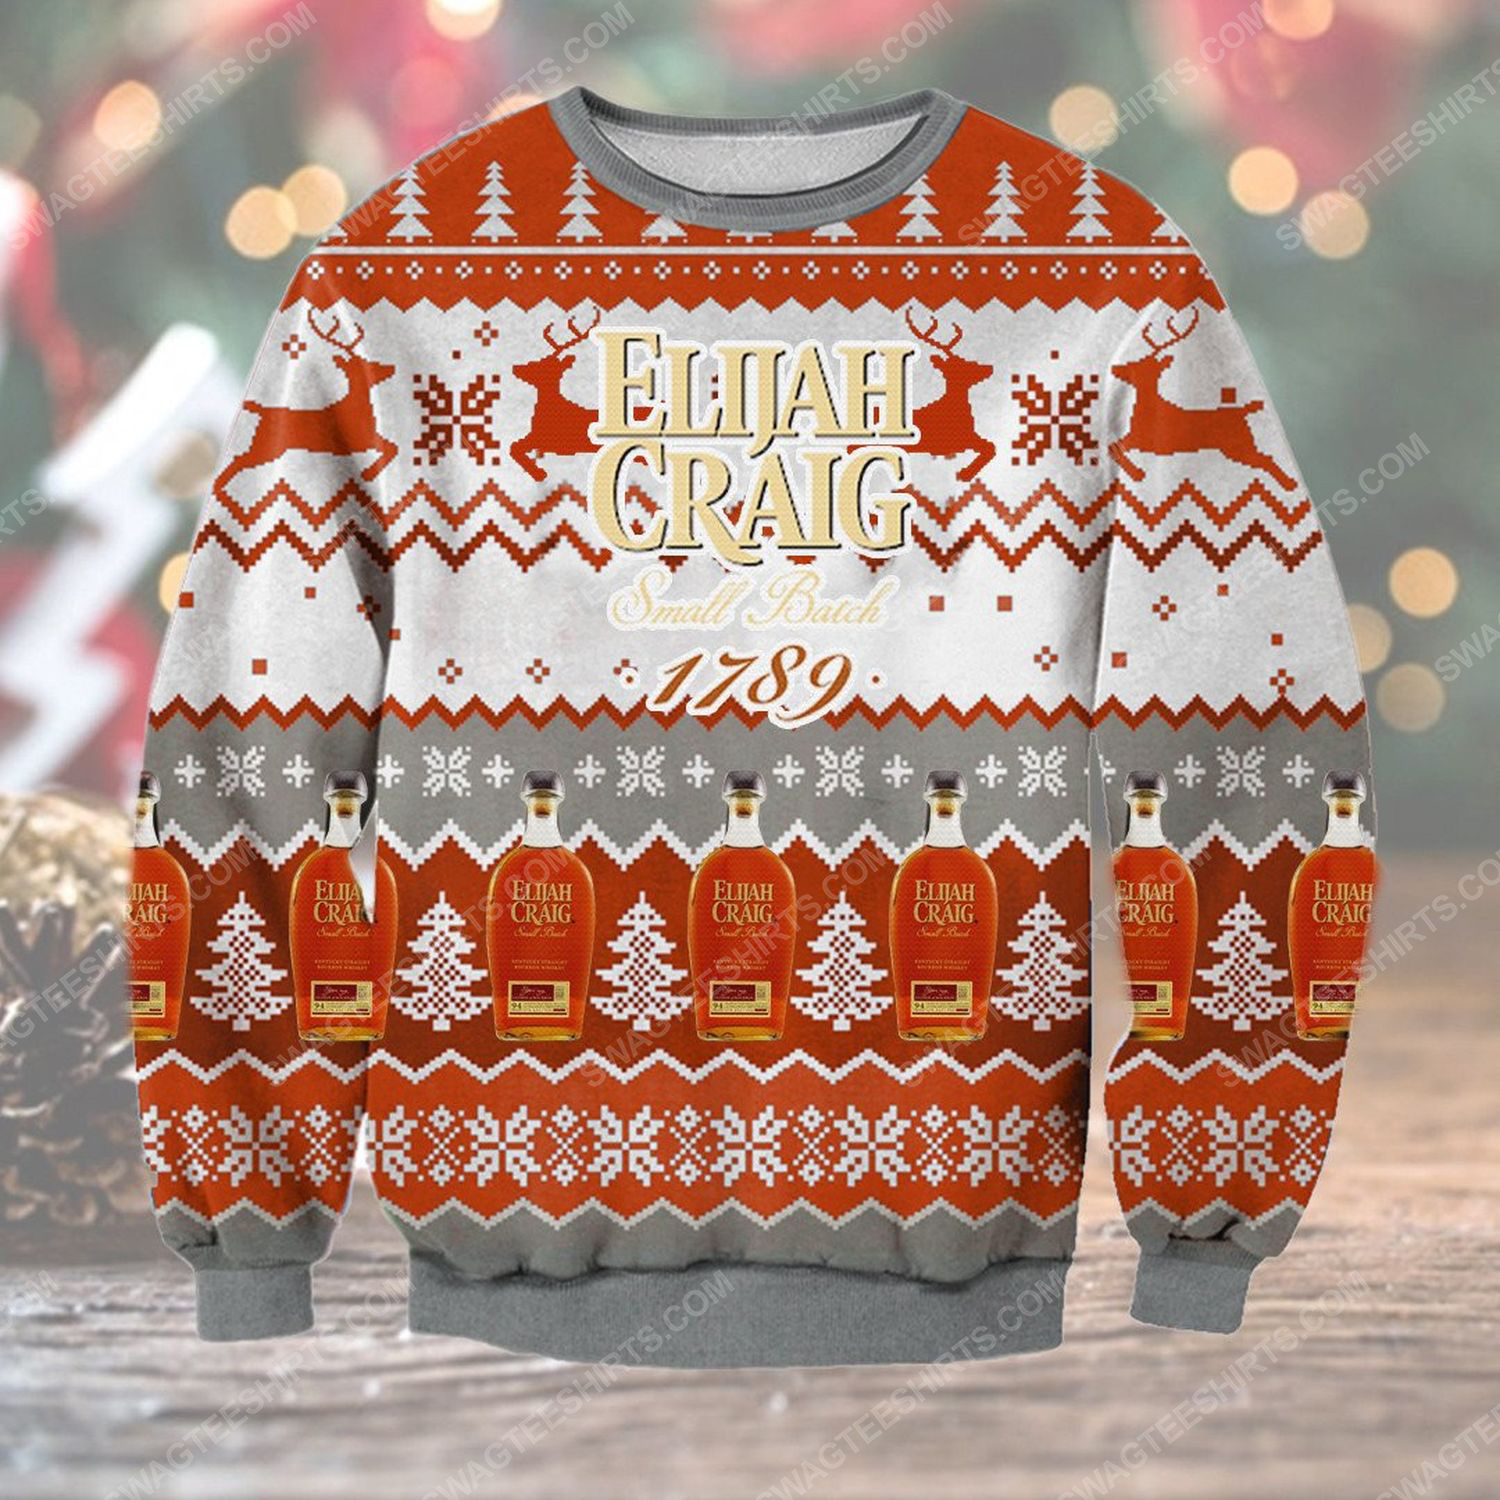 Elijah craig small batch 1789 ugly christmas sweater 1 - Copy (2)